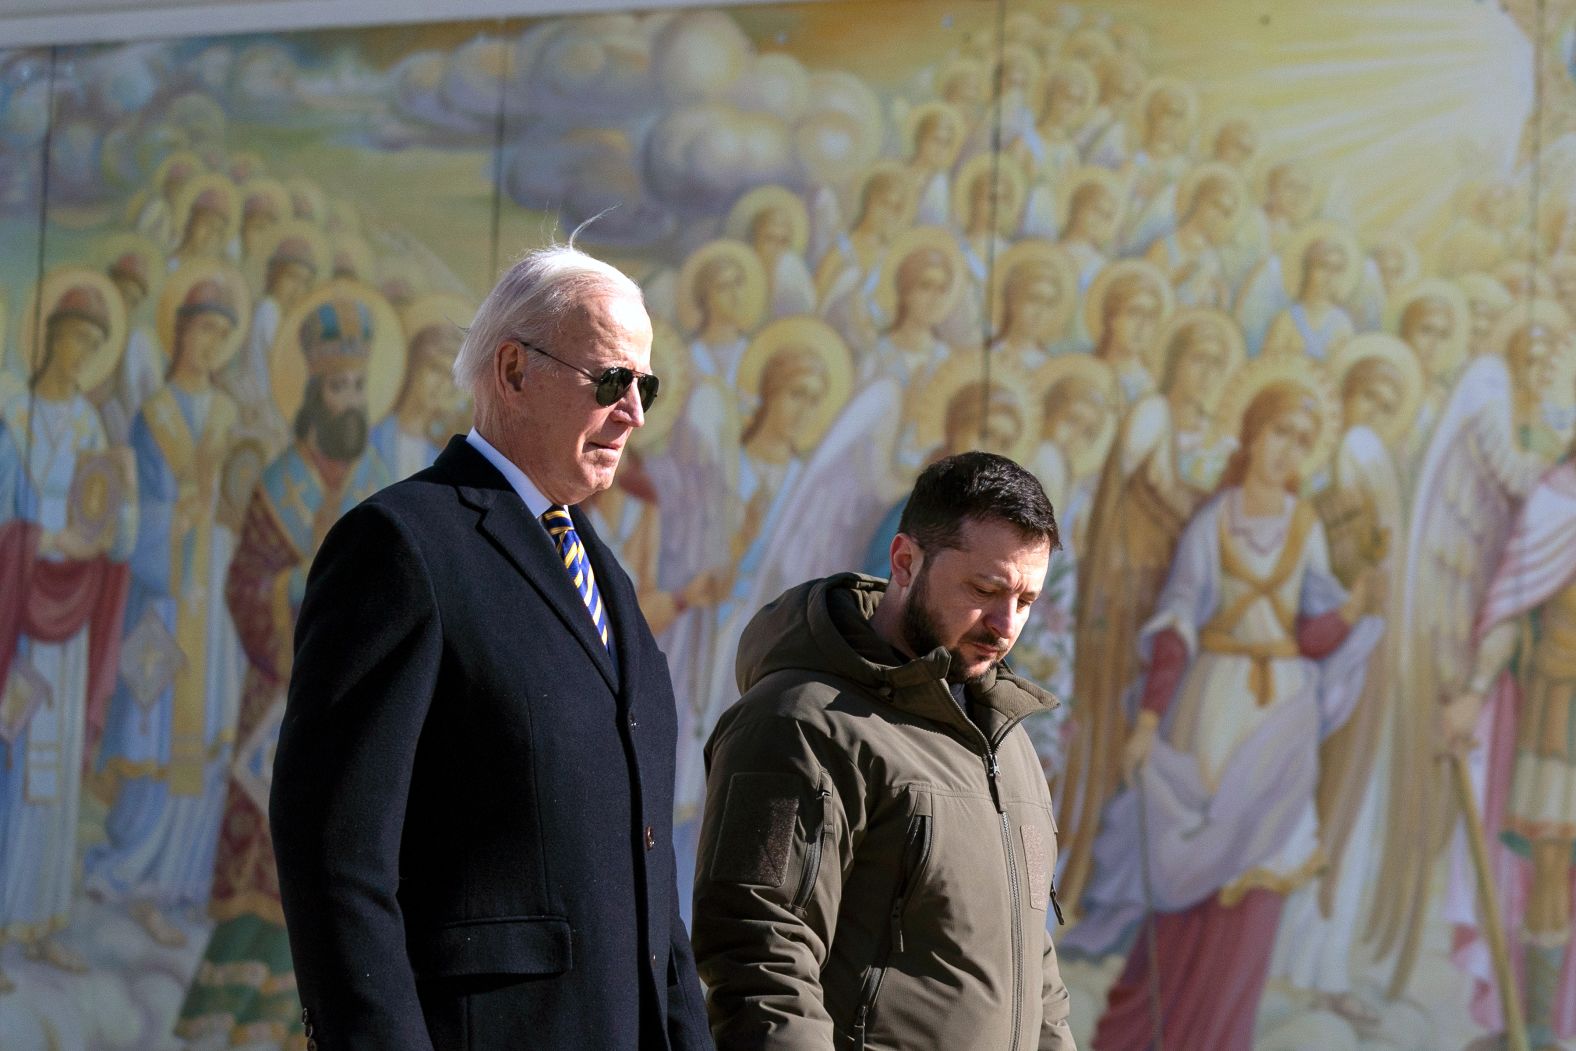 Biden walks with Ukrainian President Volodymyr Zelensky during a <a href="index.php?page=&url=http%3A%2F%2Fwww.cnn.com%2F2023%2F02%2F20%2Fworld%2Fgallery%2Fbiden-visit-ukraine-poland%2Findex.html" target="_blank">surprise visit to Kyiv, Ukraine</a>, in February 2023.